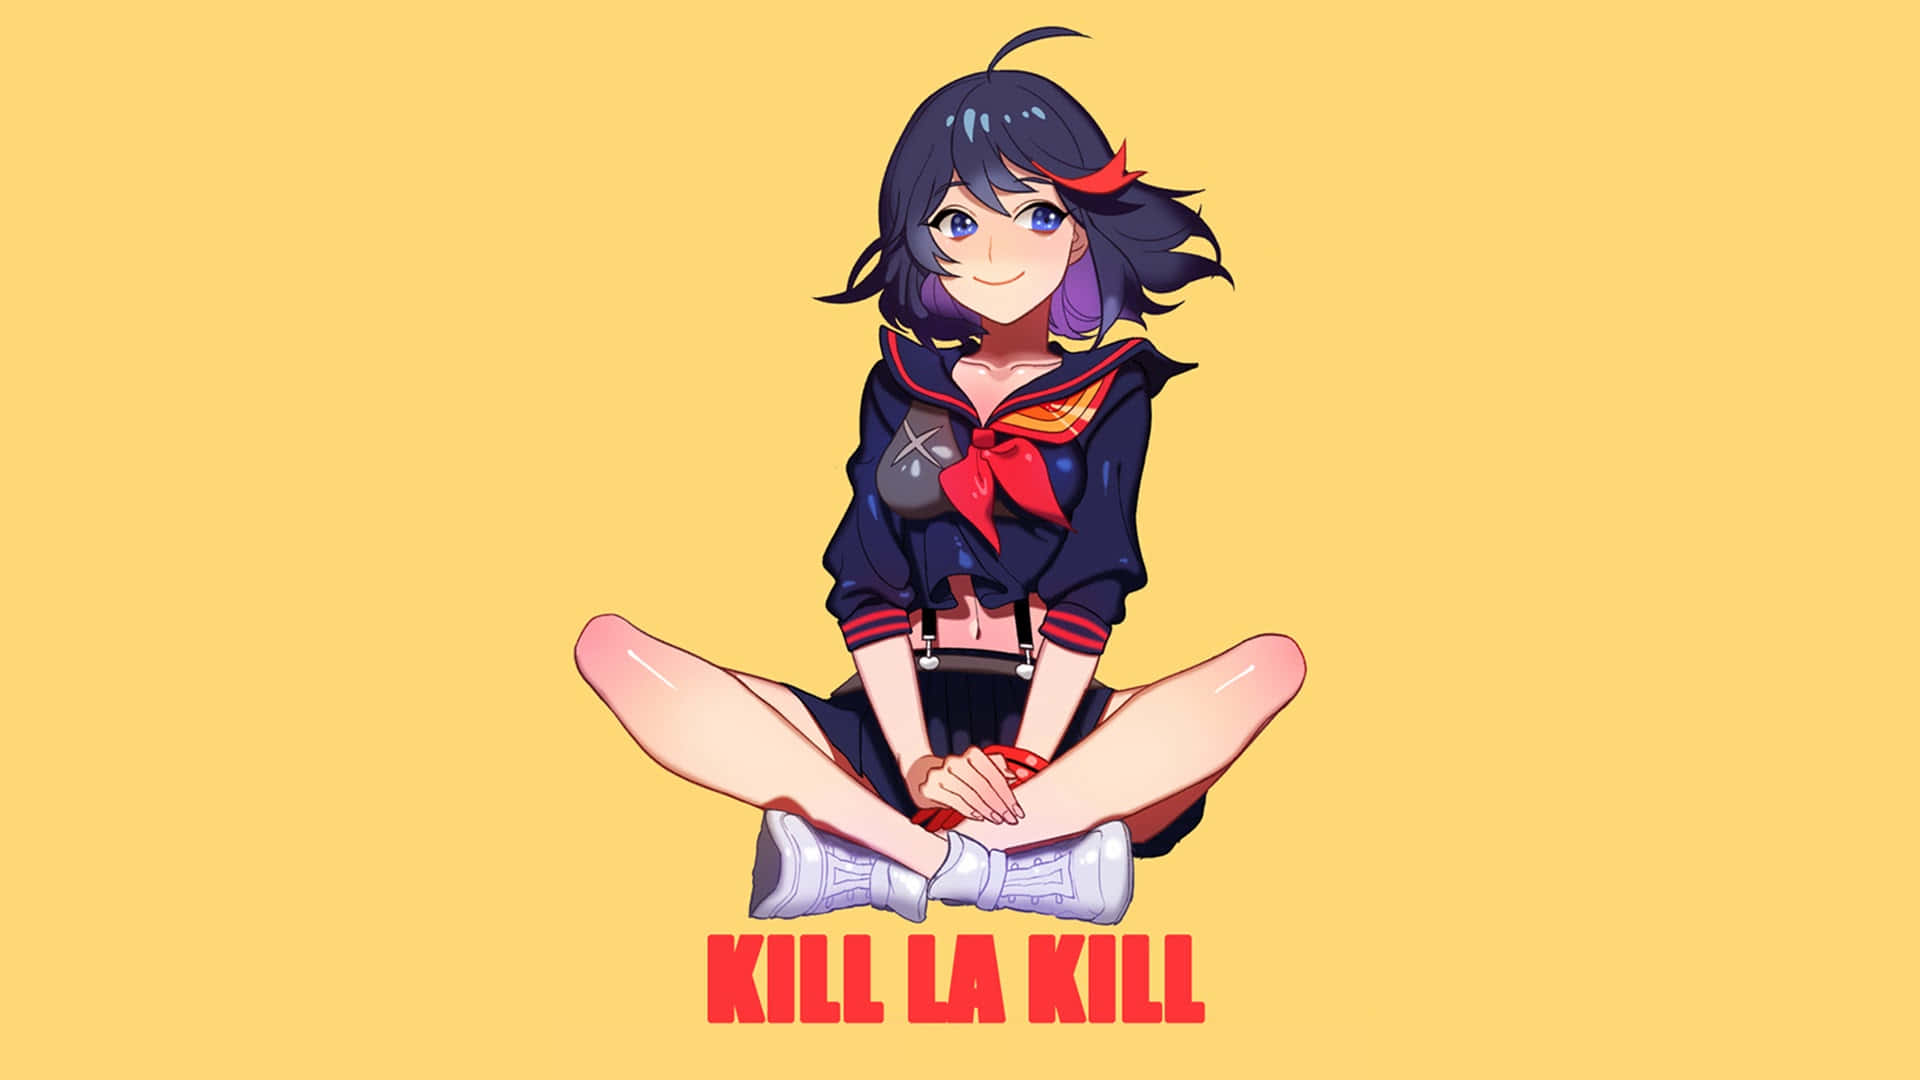 Ryuko Matoi unleashes her skills in Kill la Kill